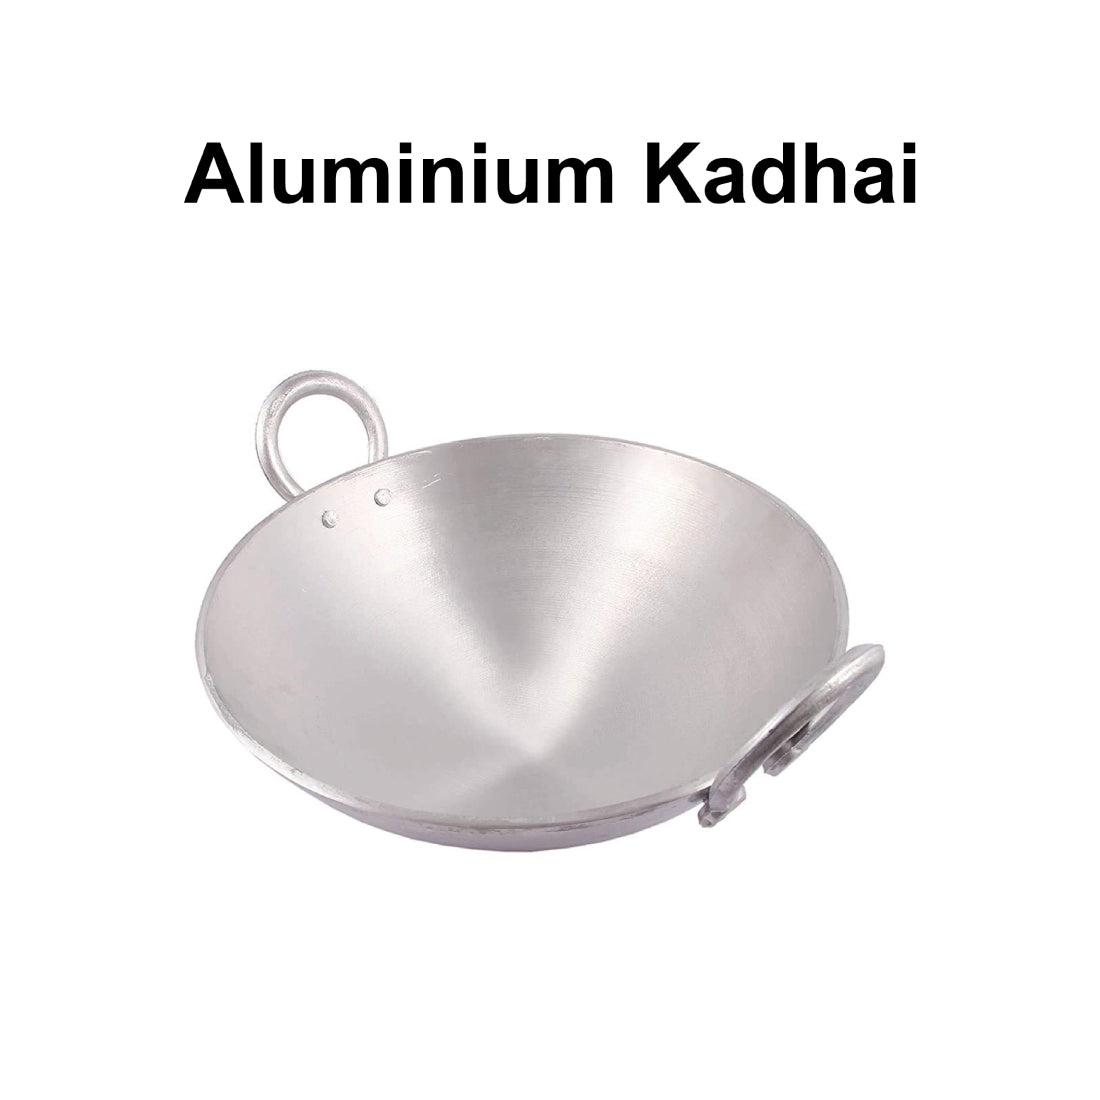 Aluminium Kadhai